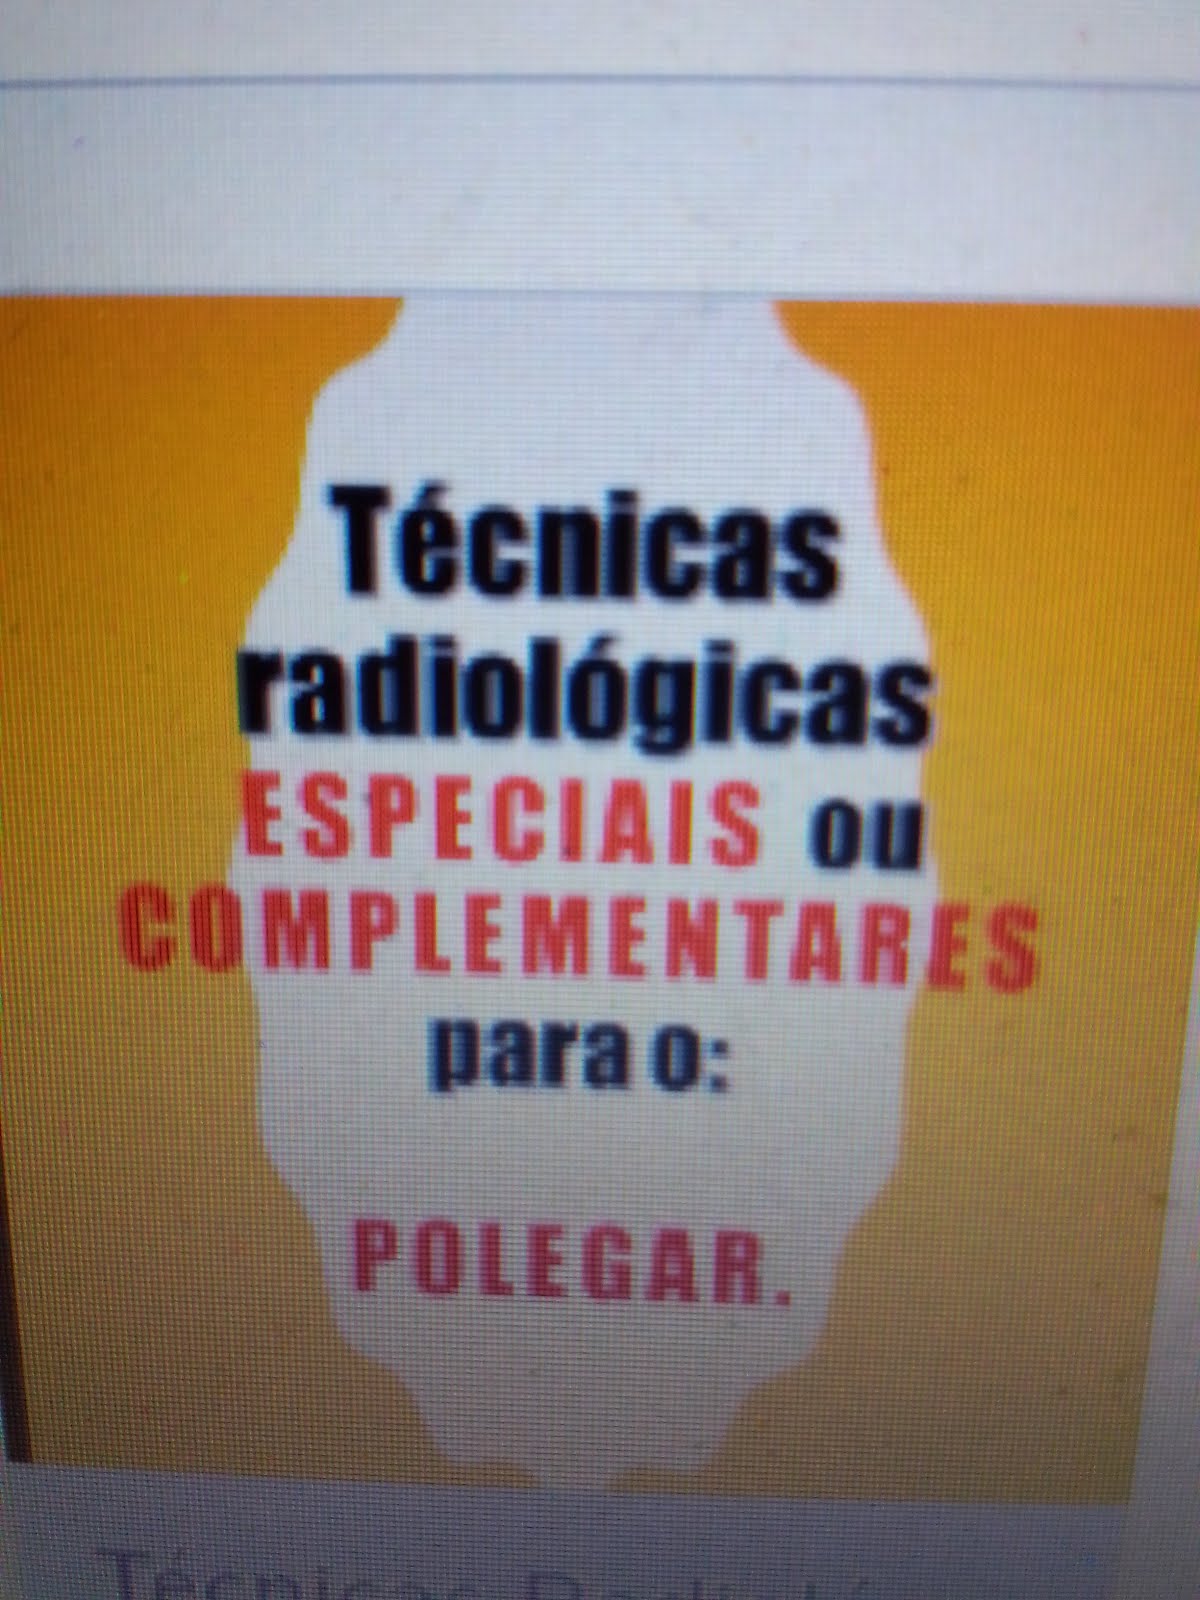 Livro Radiologia